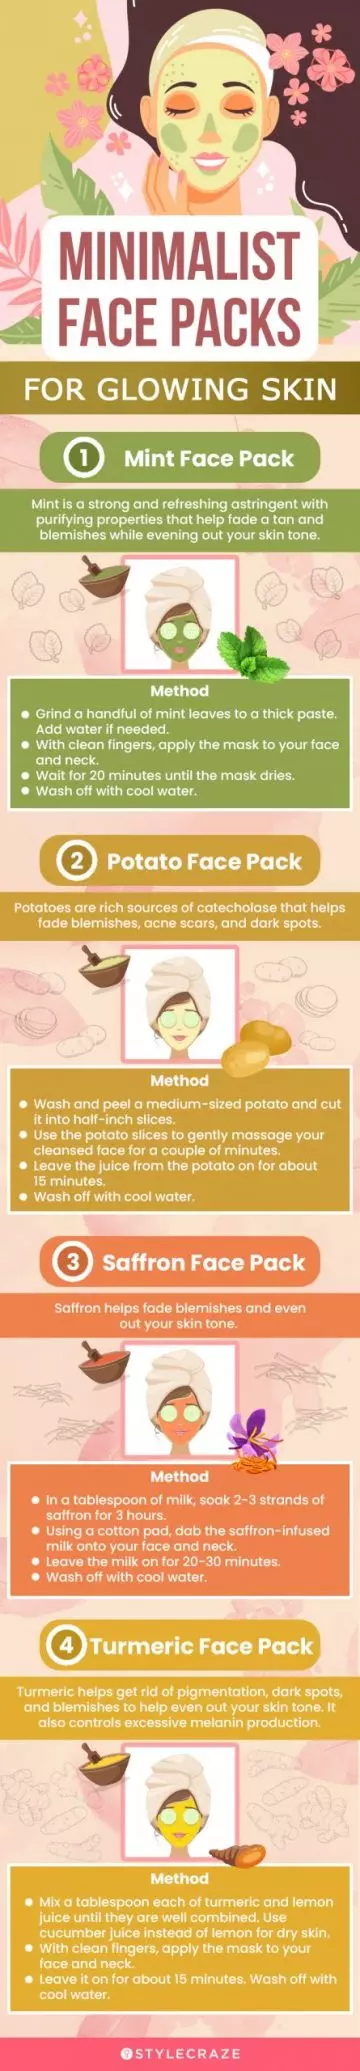 minimalist face packs for lightened skin (infographic)